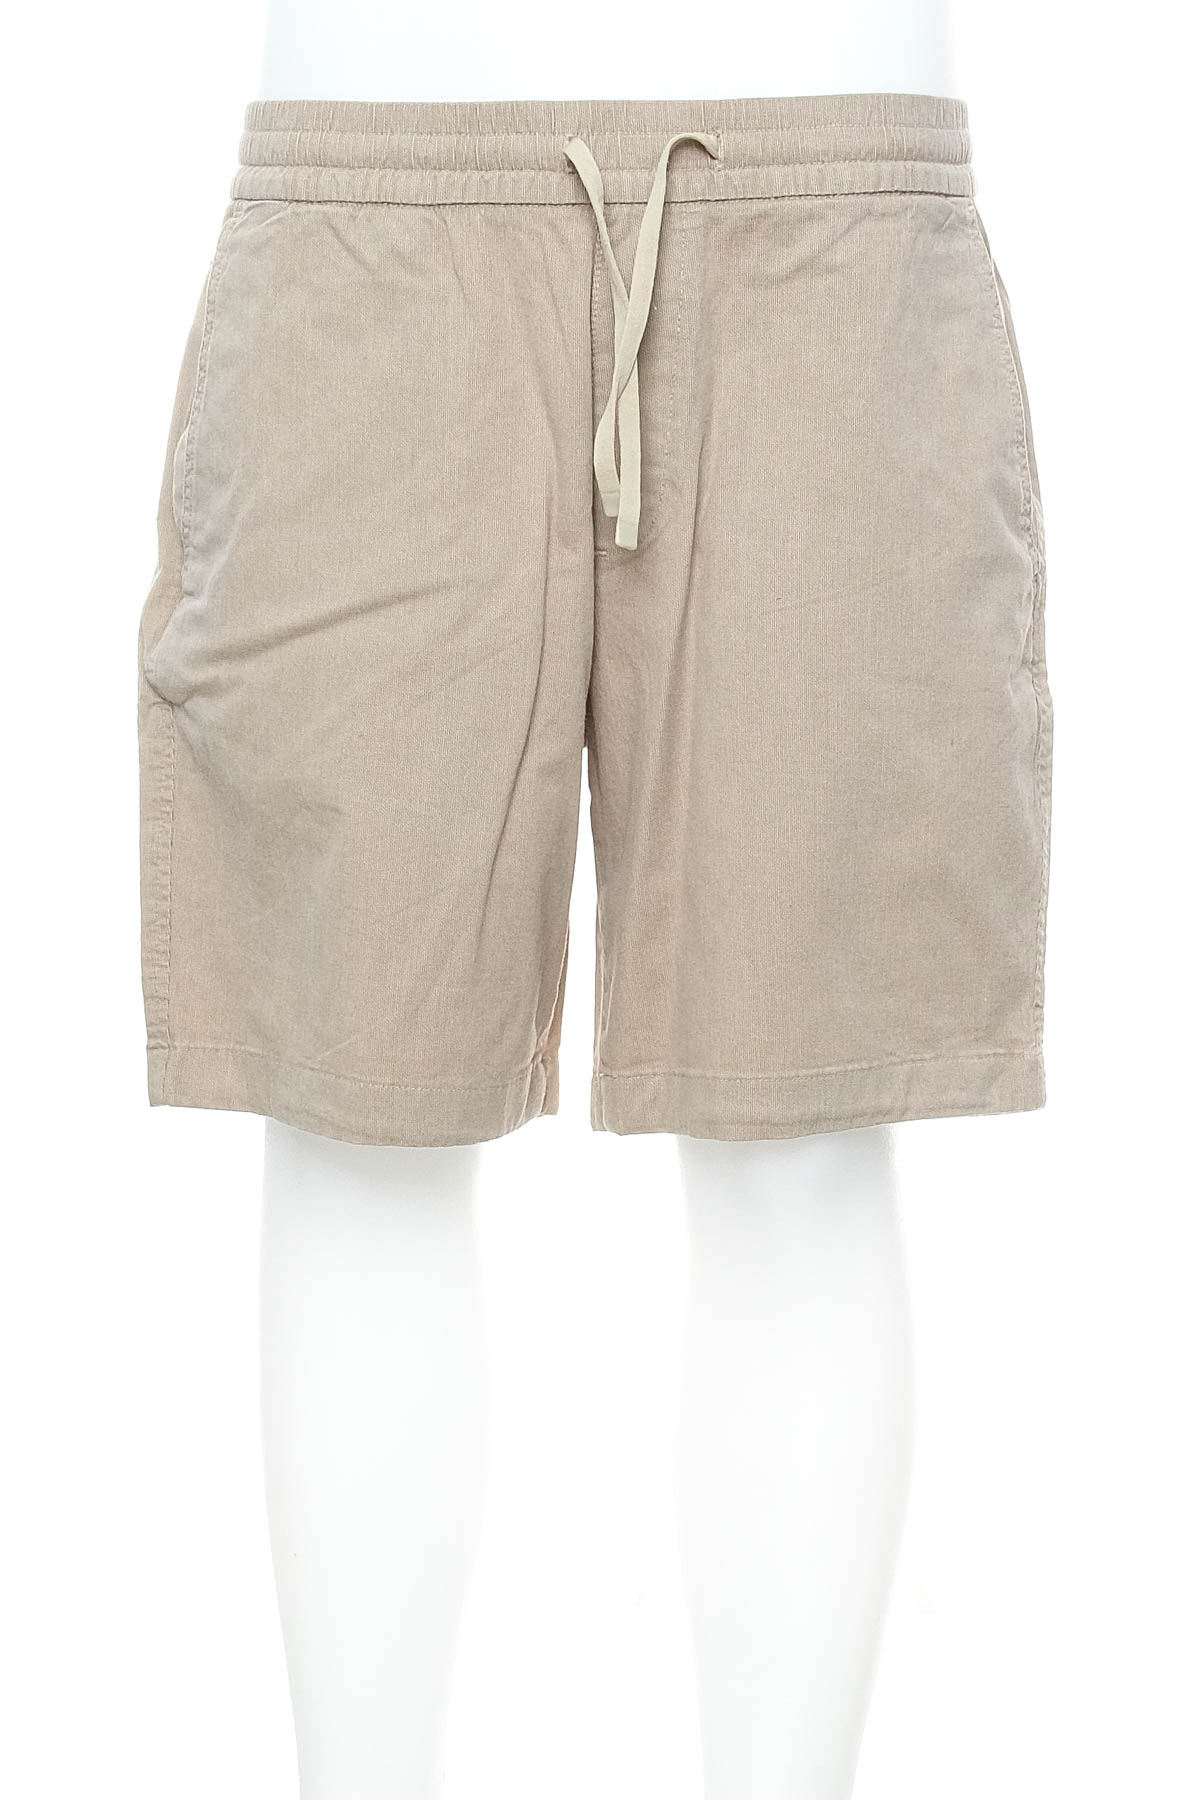 Pantaloni scurți bărbați - Abercrombie & Fitch - 0